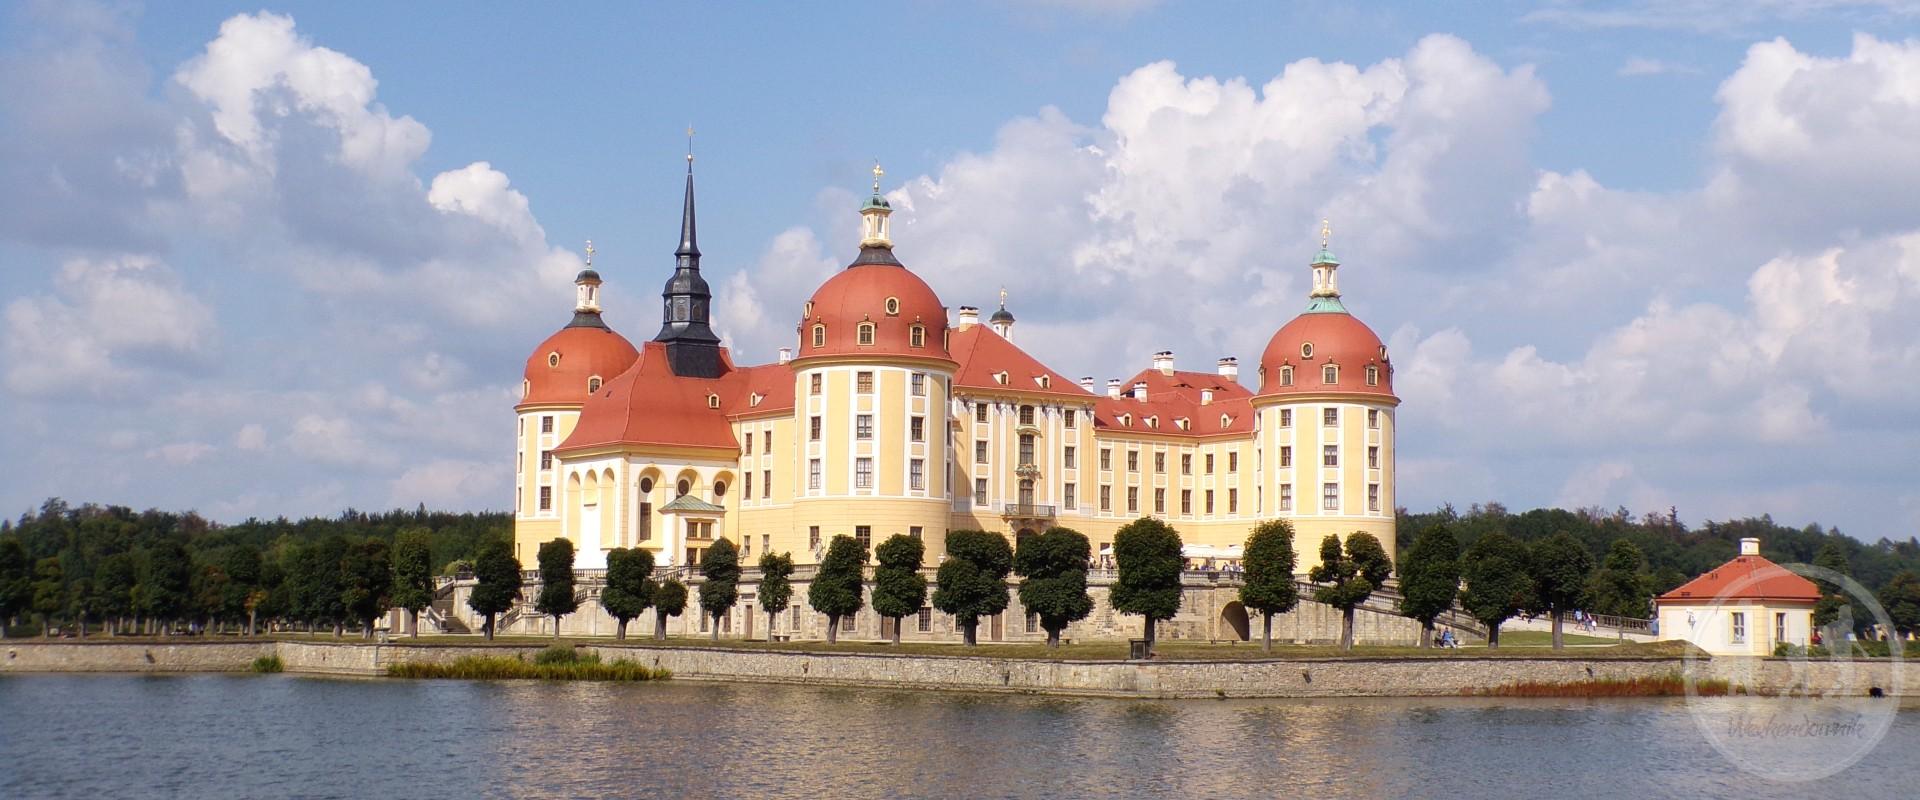 Moritzburg - pałac Kopciuszka